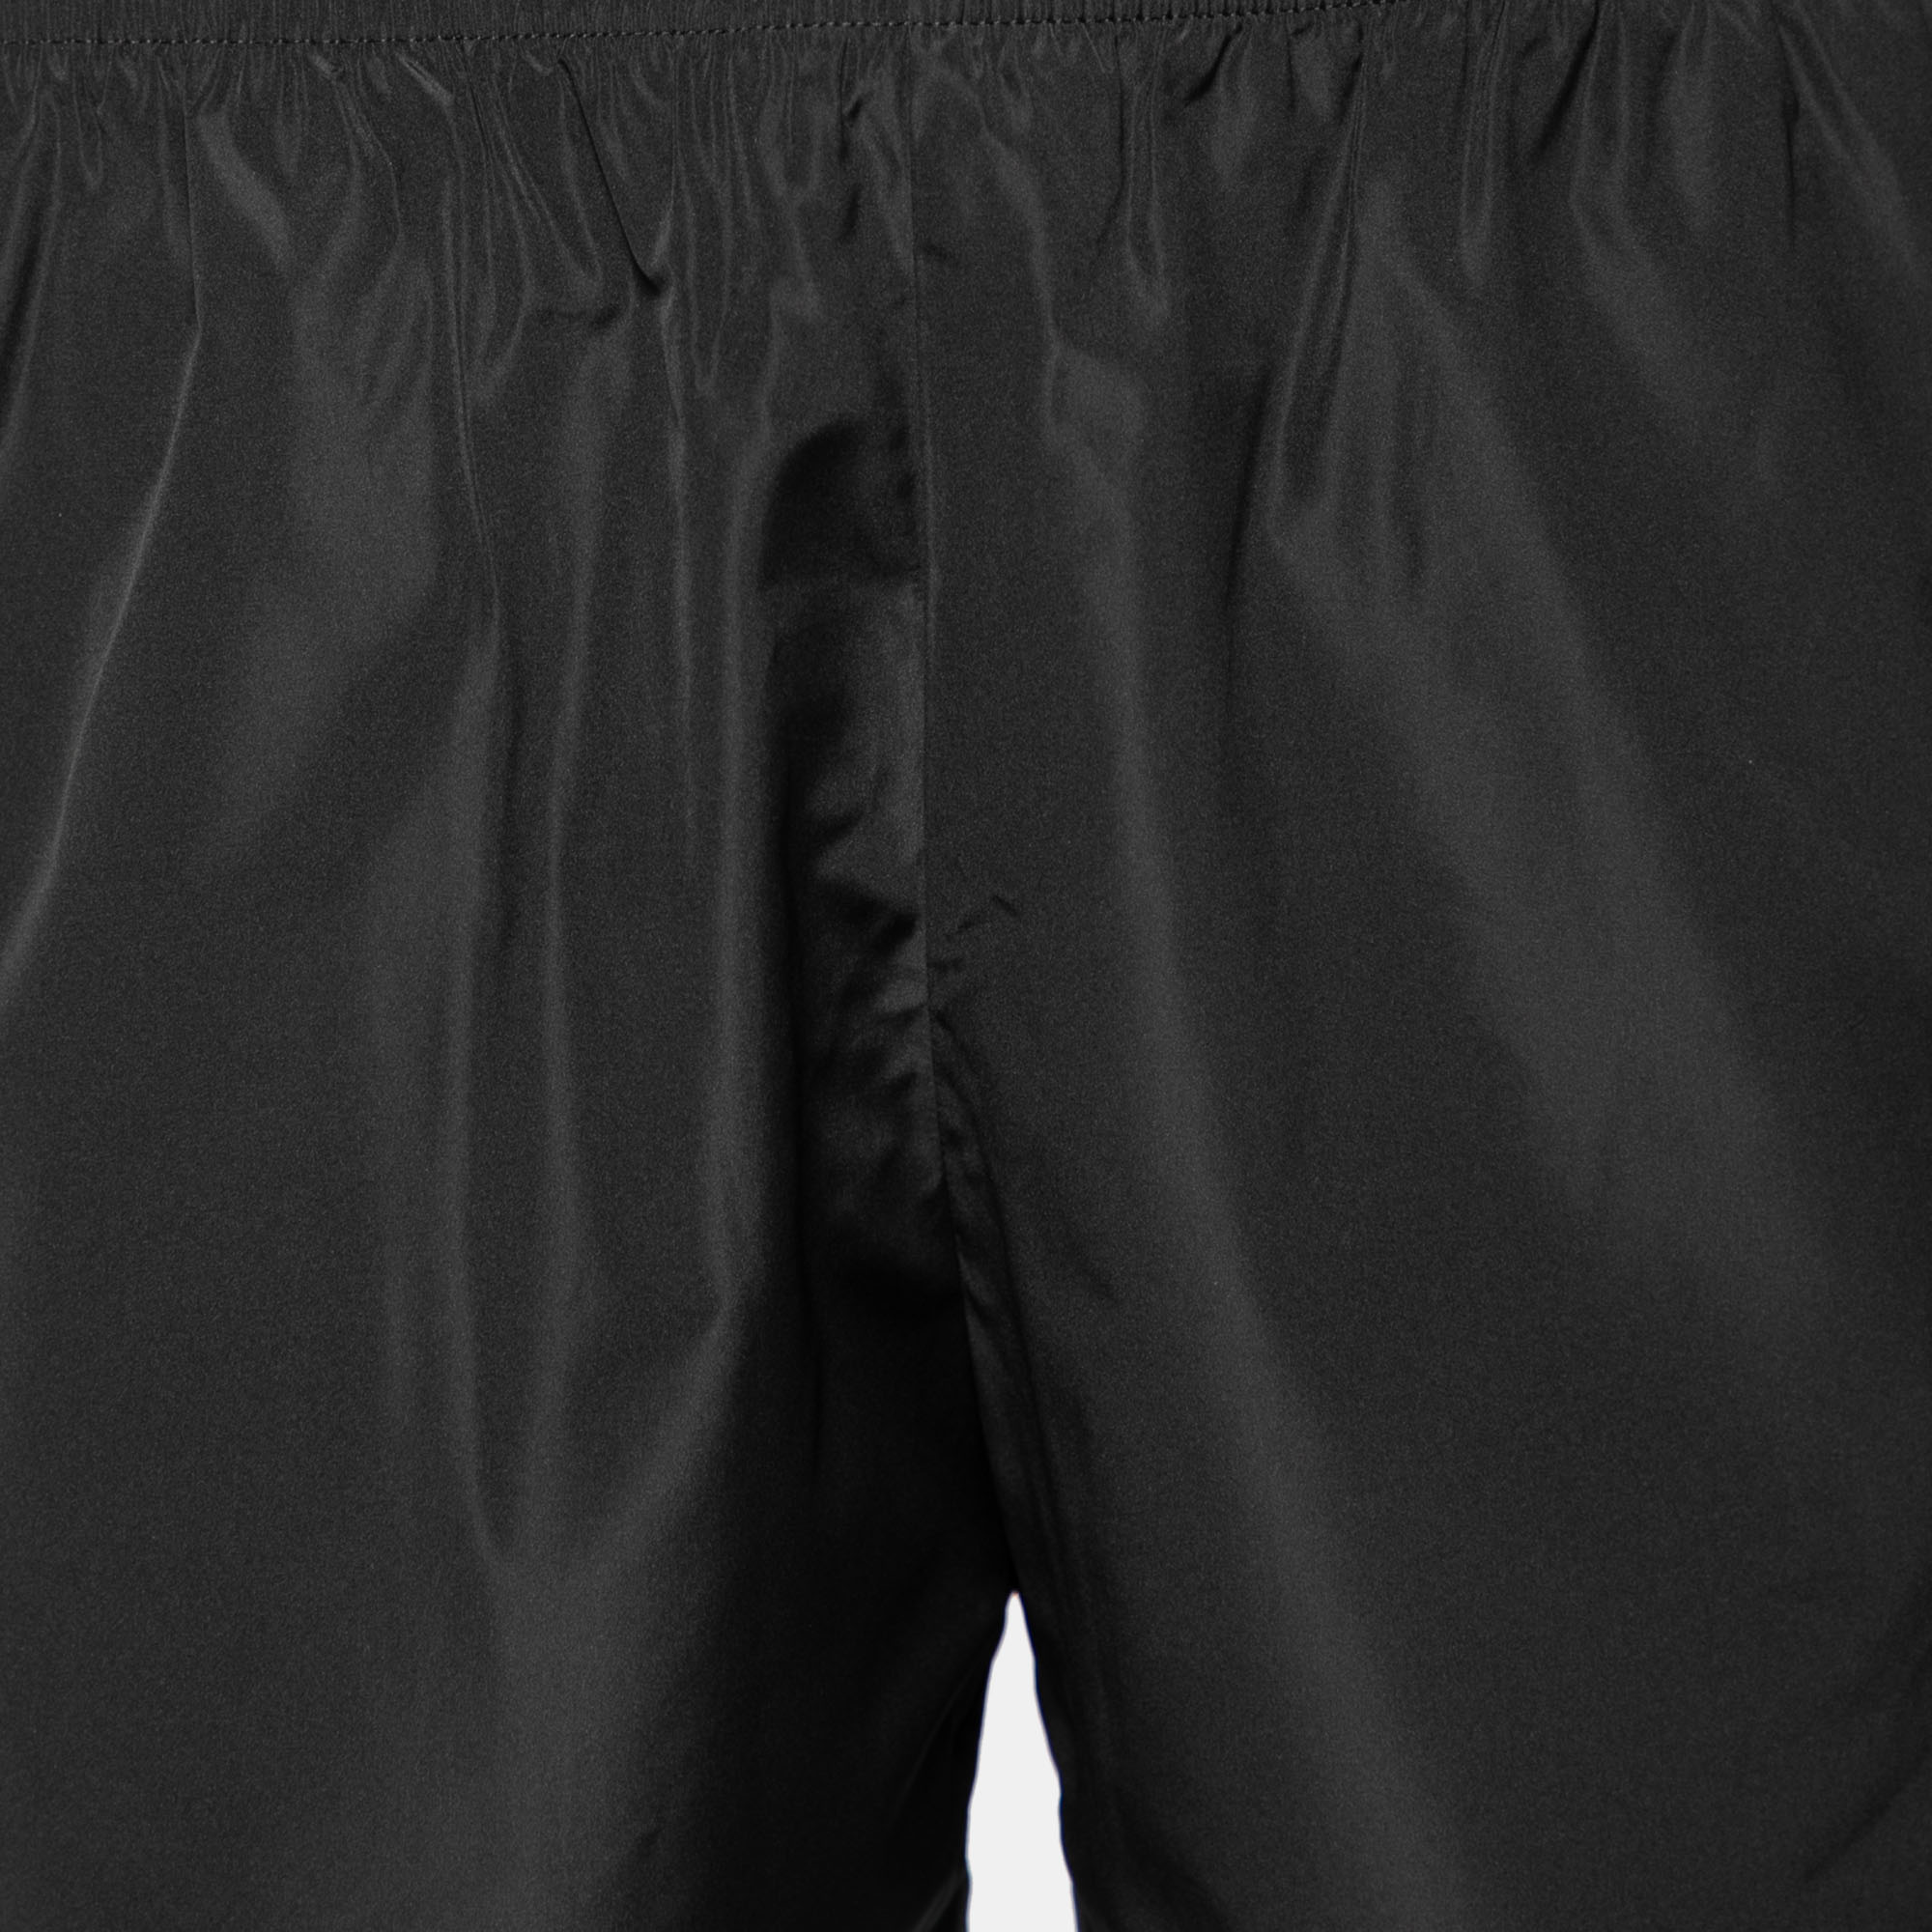 Balenciaga Black Synthetic Logo Embroidered Running Shorts M